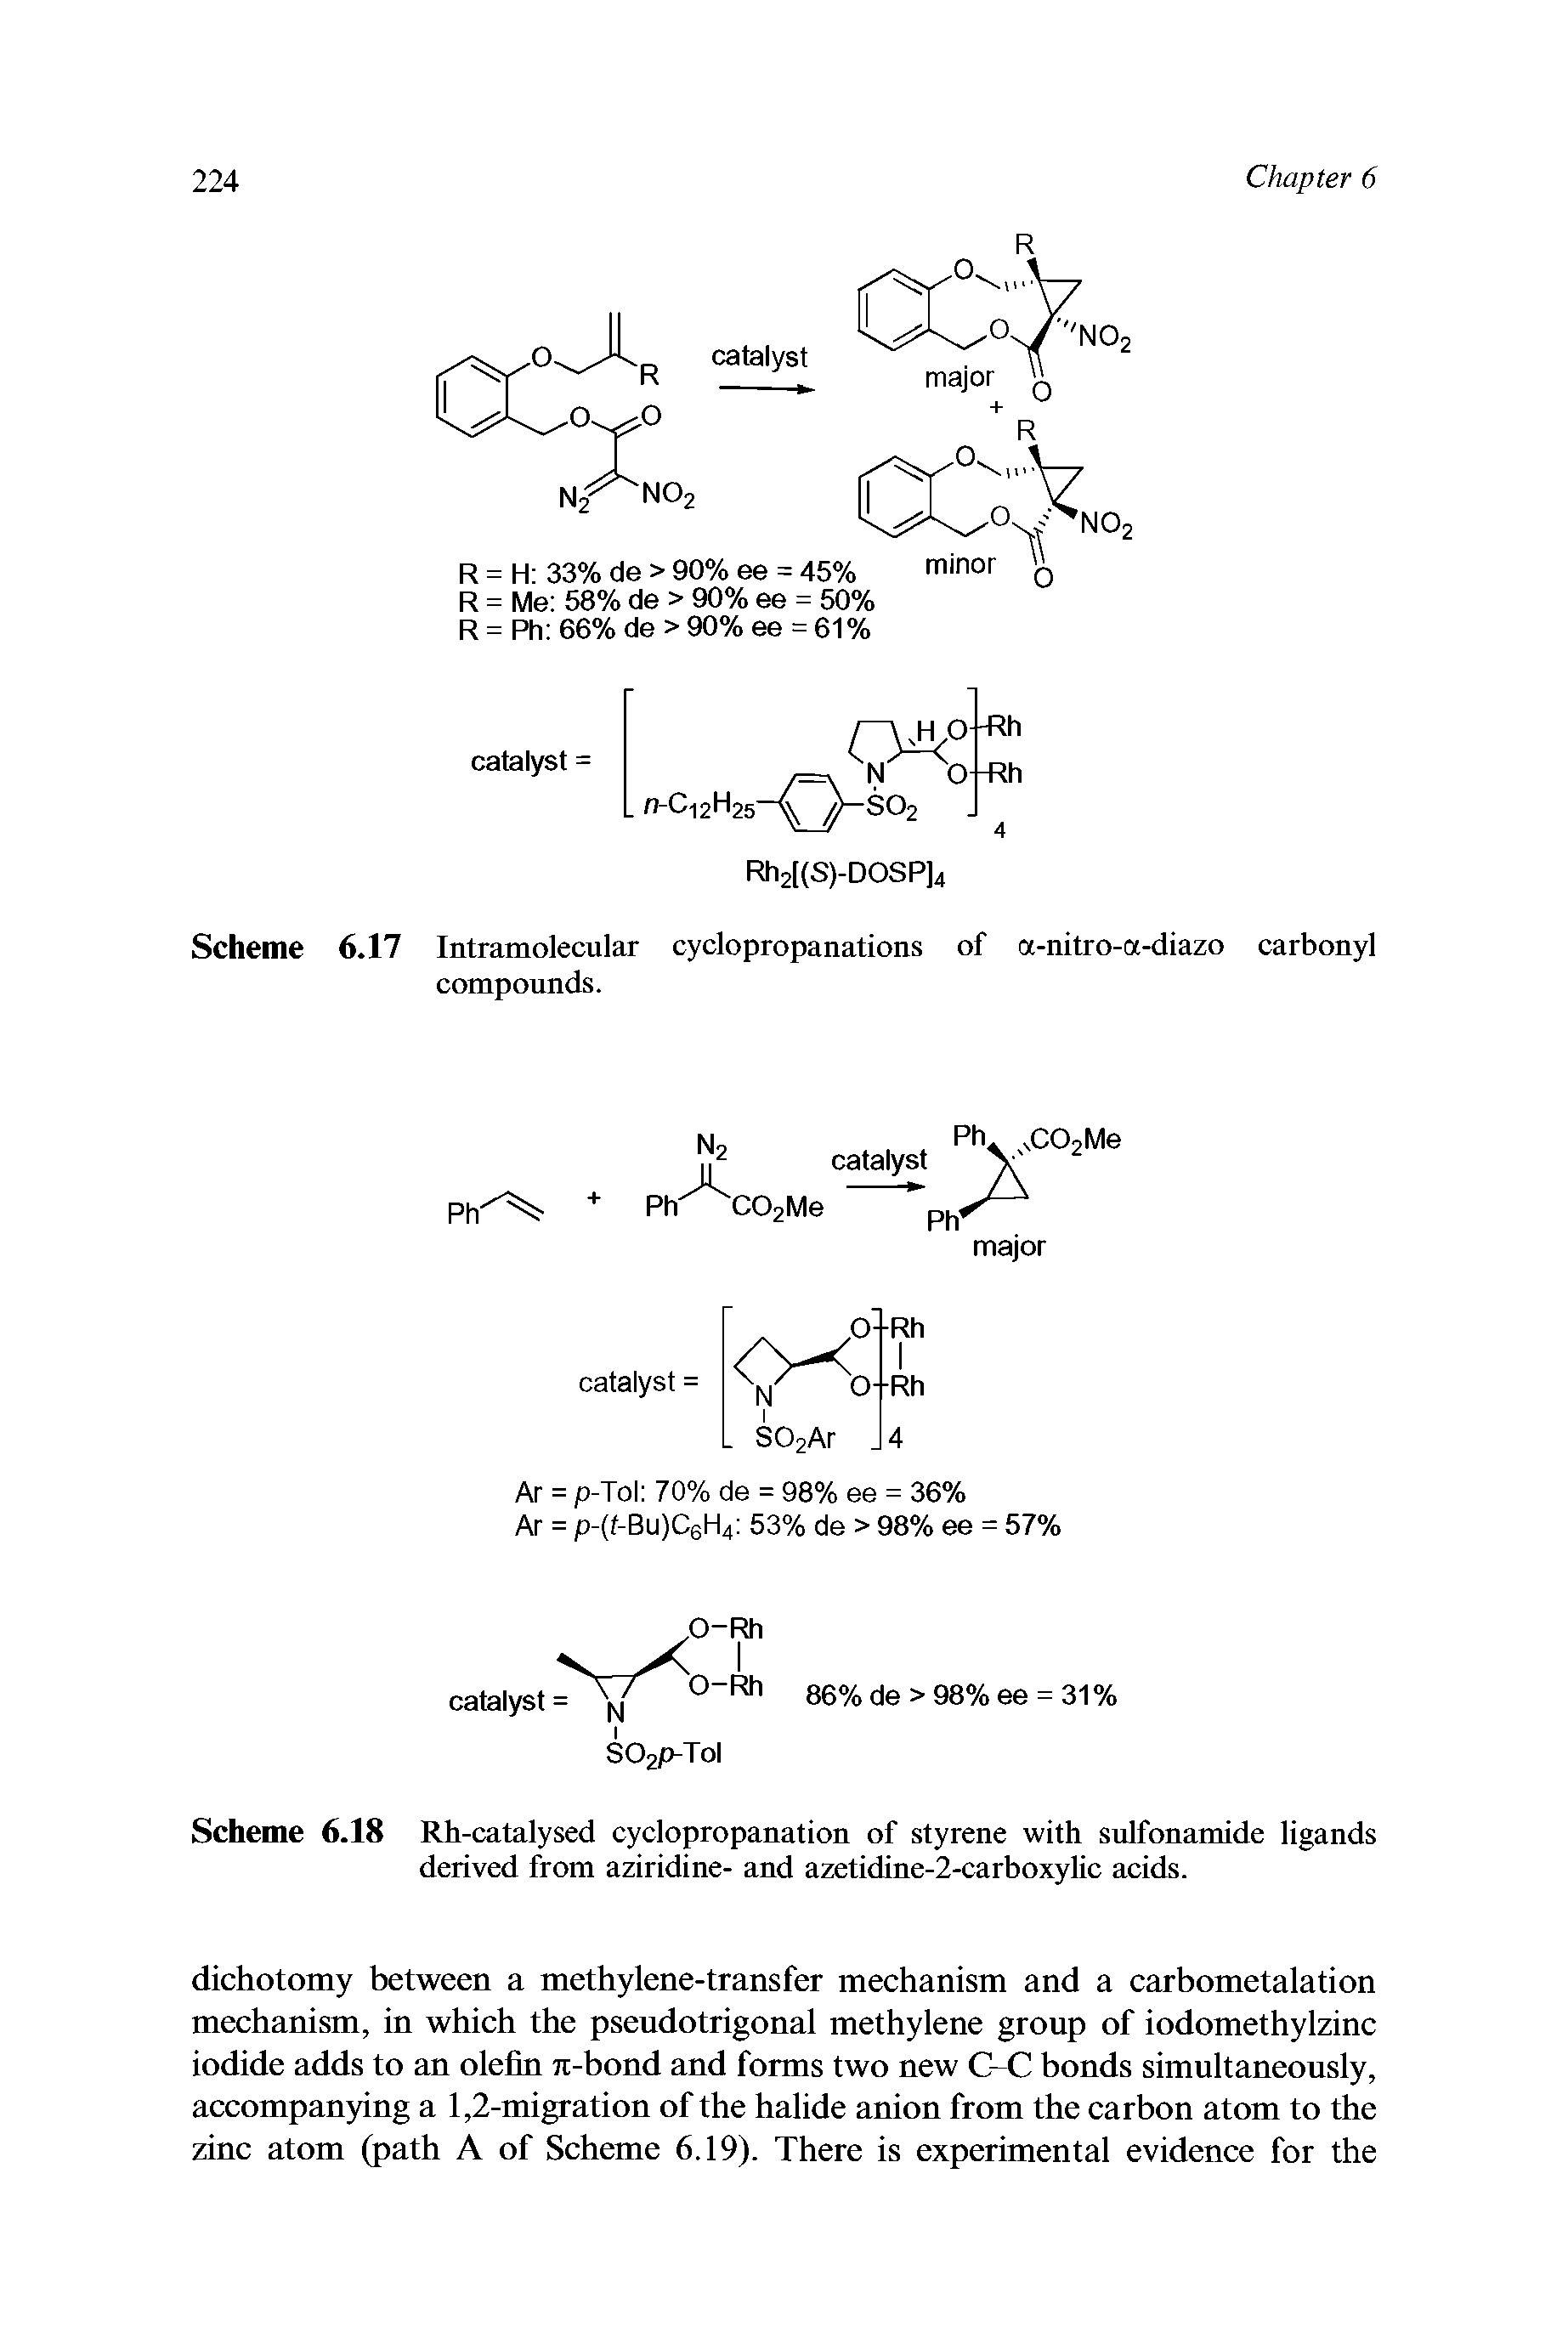 Scheme 6.17 Intramolecular cyclopropanations of a-nitro-a-diazo carbonyl compounds.